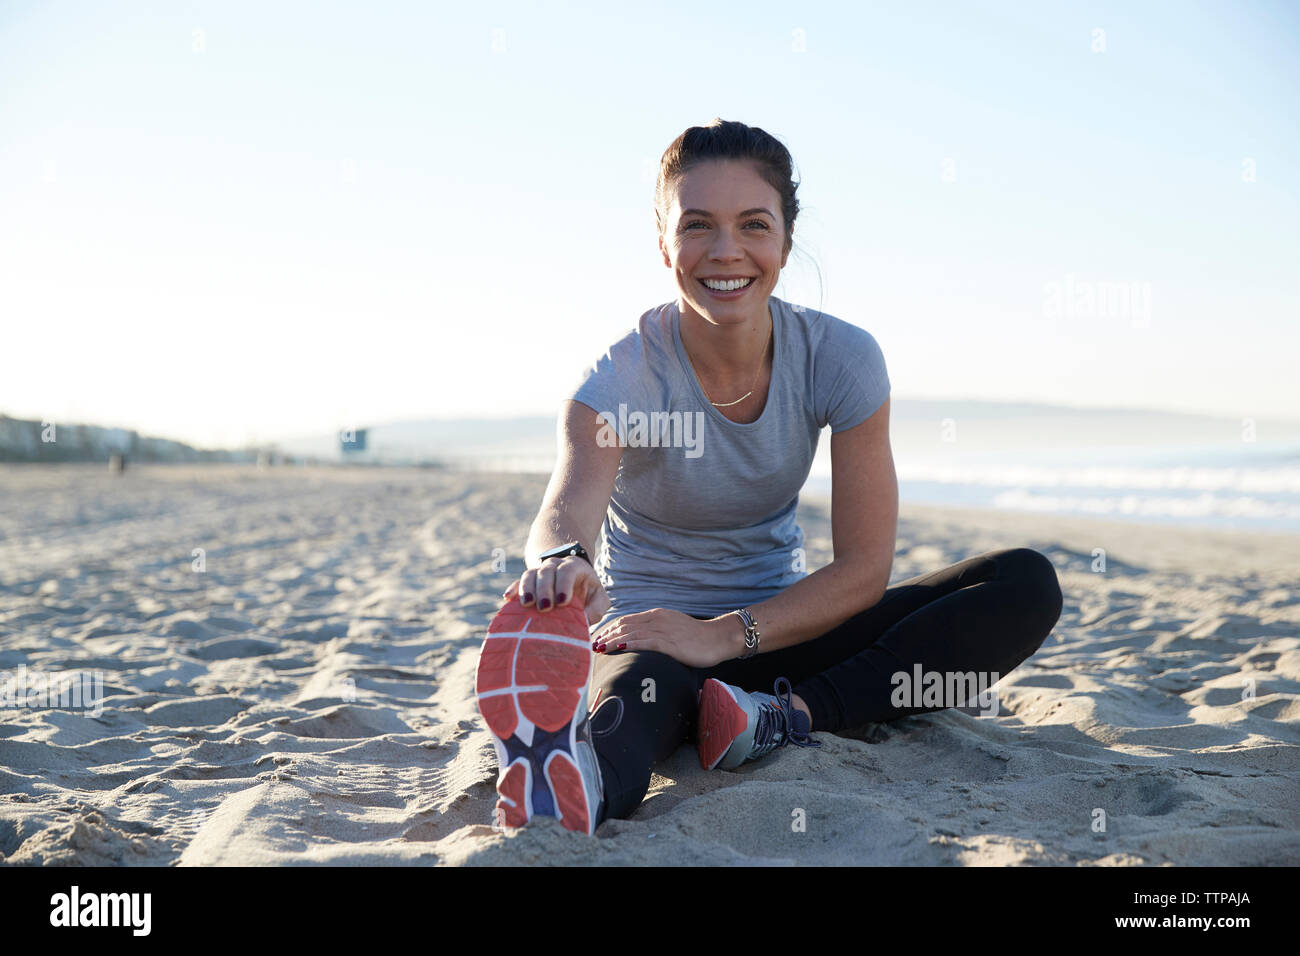 Portrait of smiling woman at beach Banque D'Images